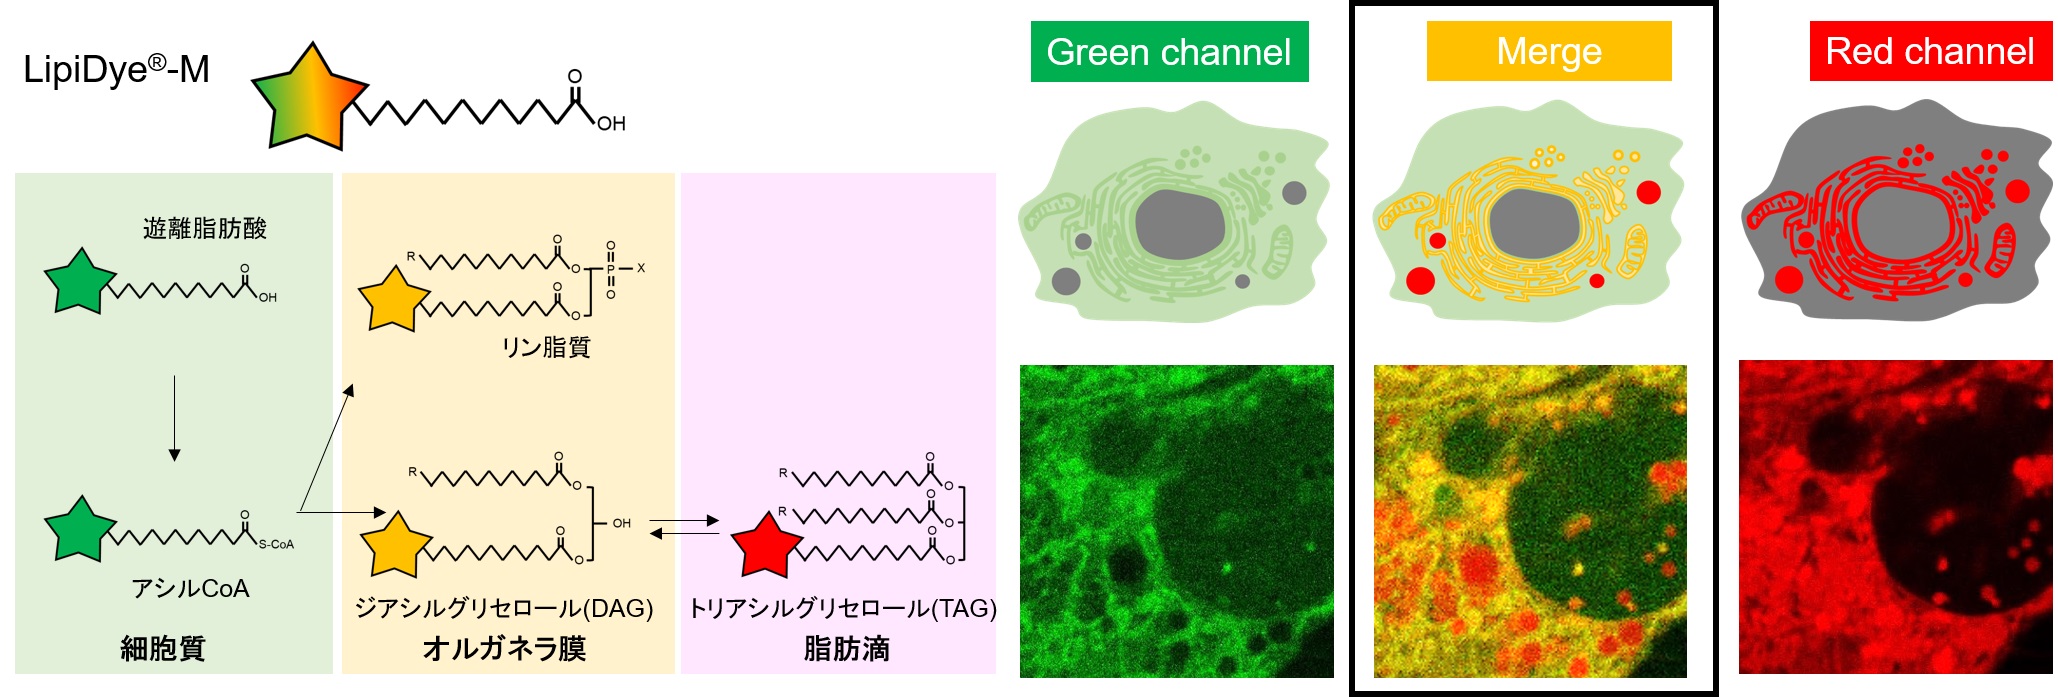 LipiDye-Mの細胞内脂質代謝過程のイメージと染色例